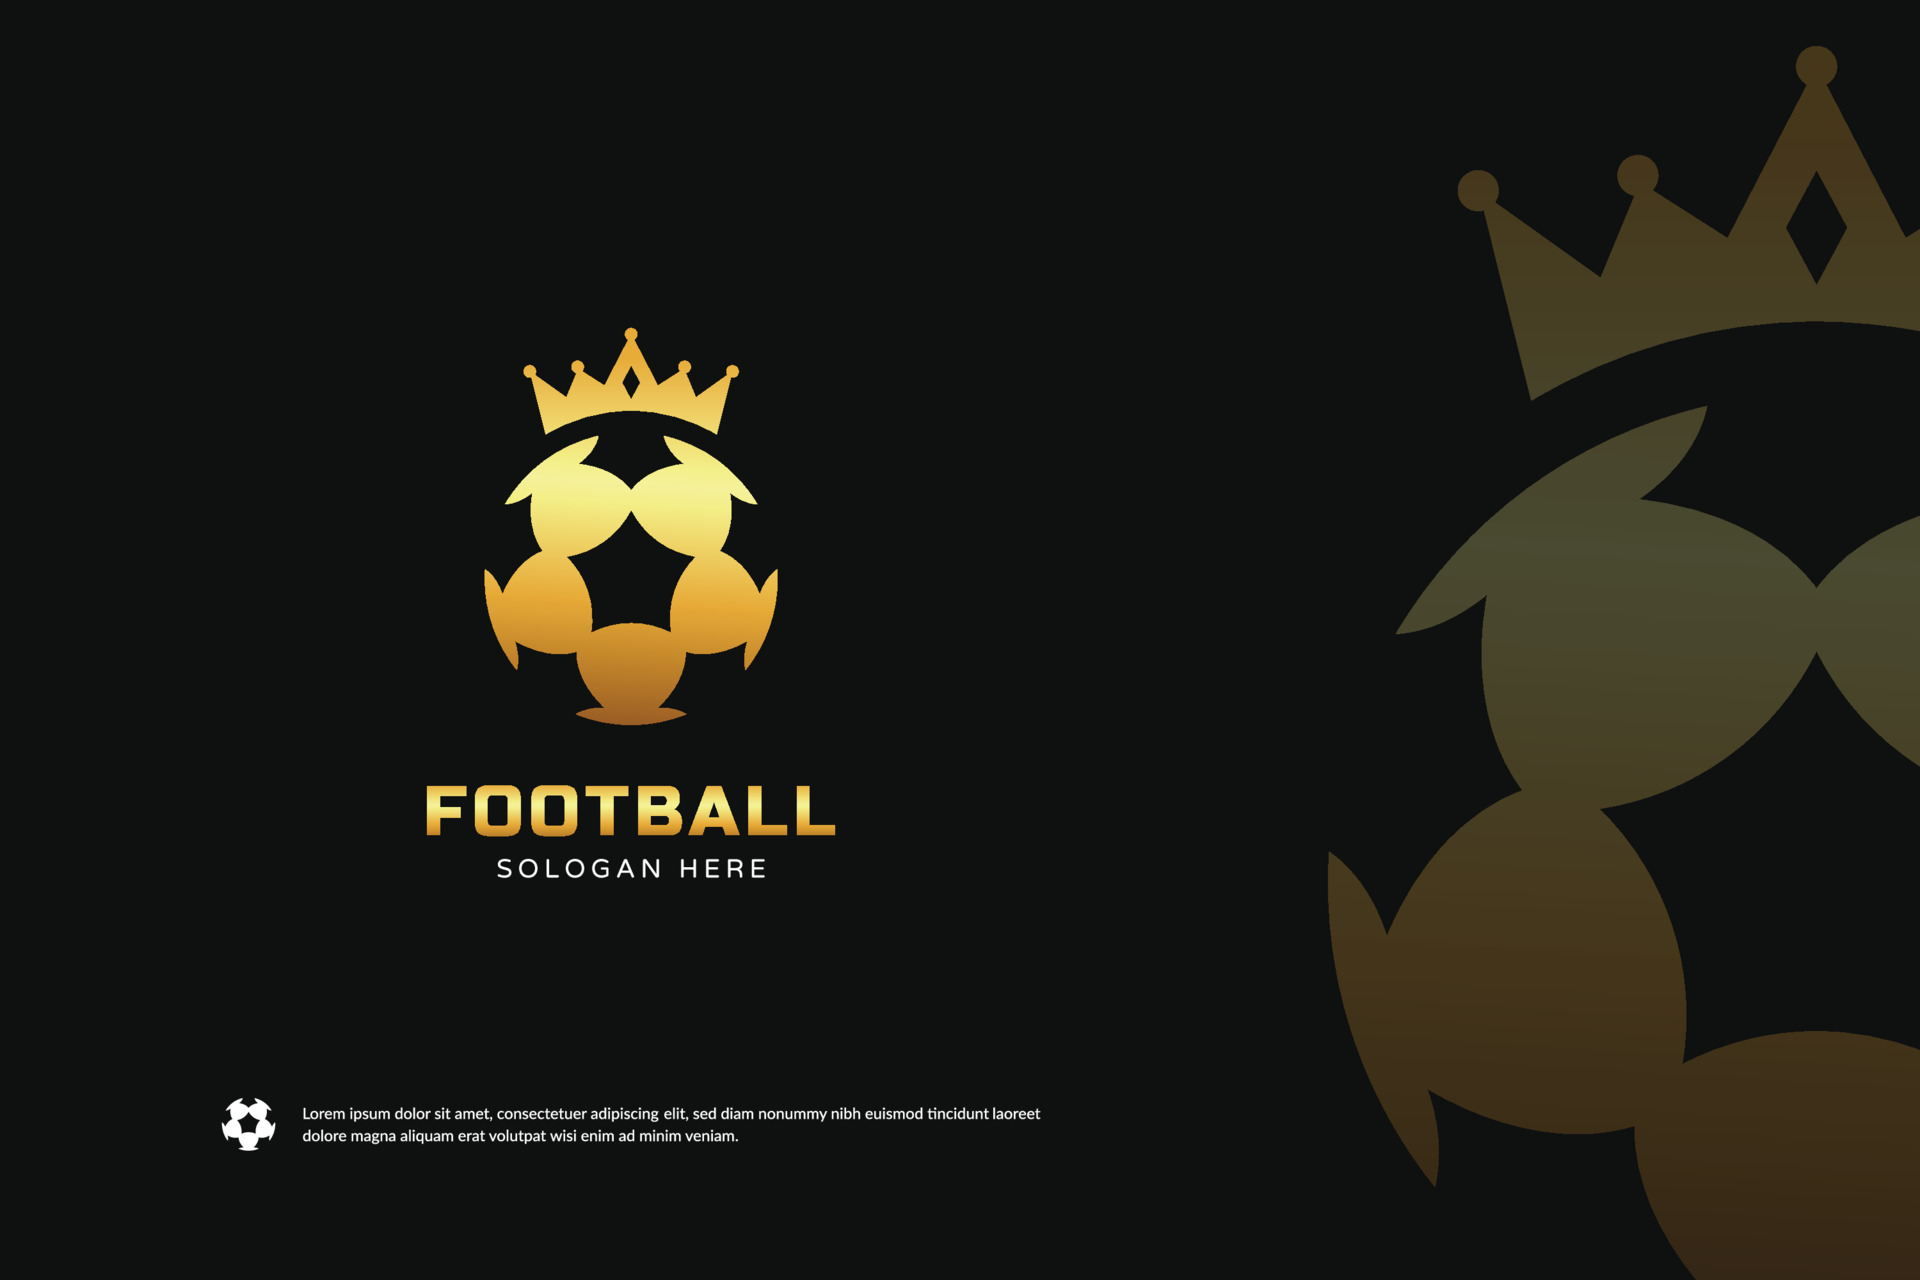 Premium Vector  Soccer championship logo club competition